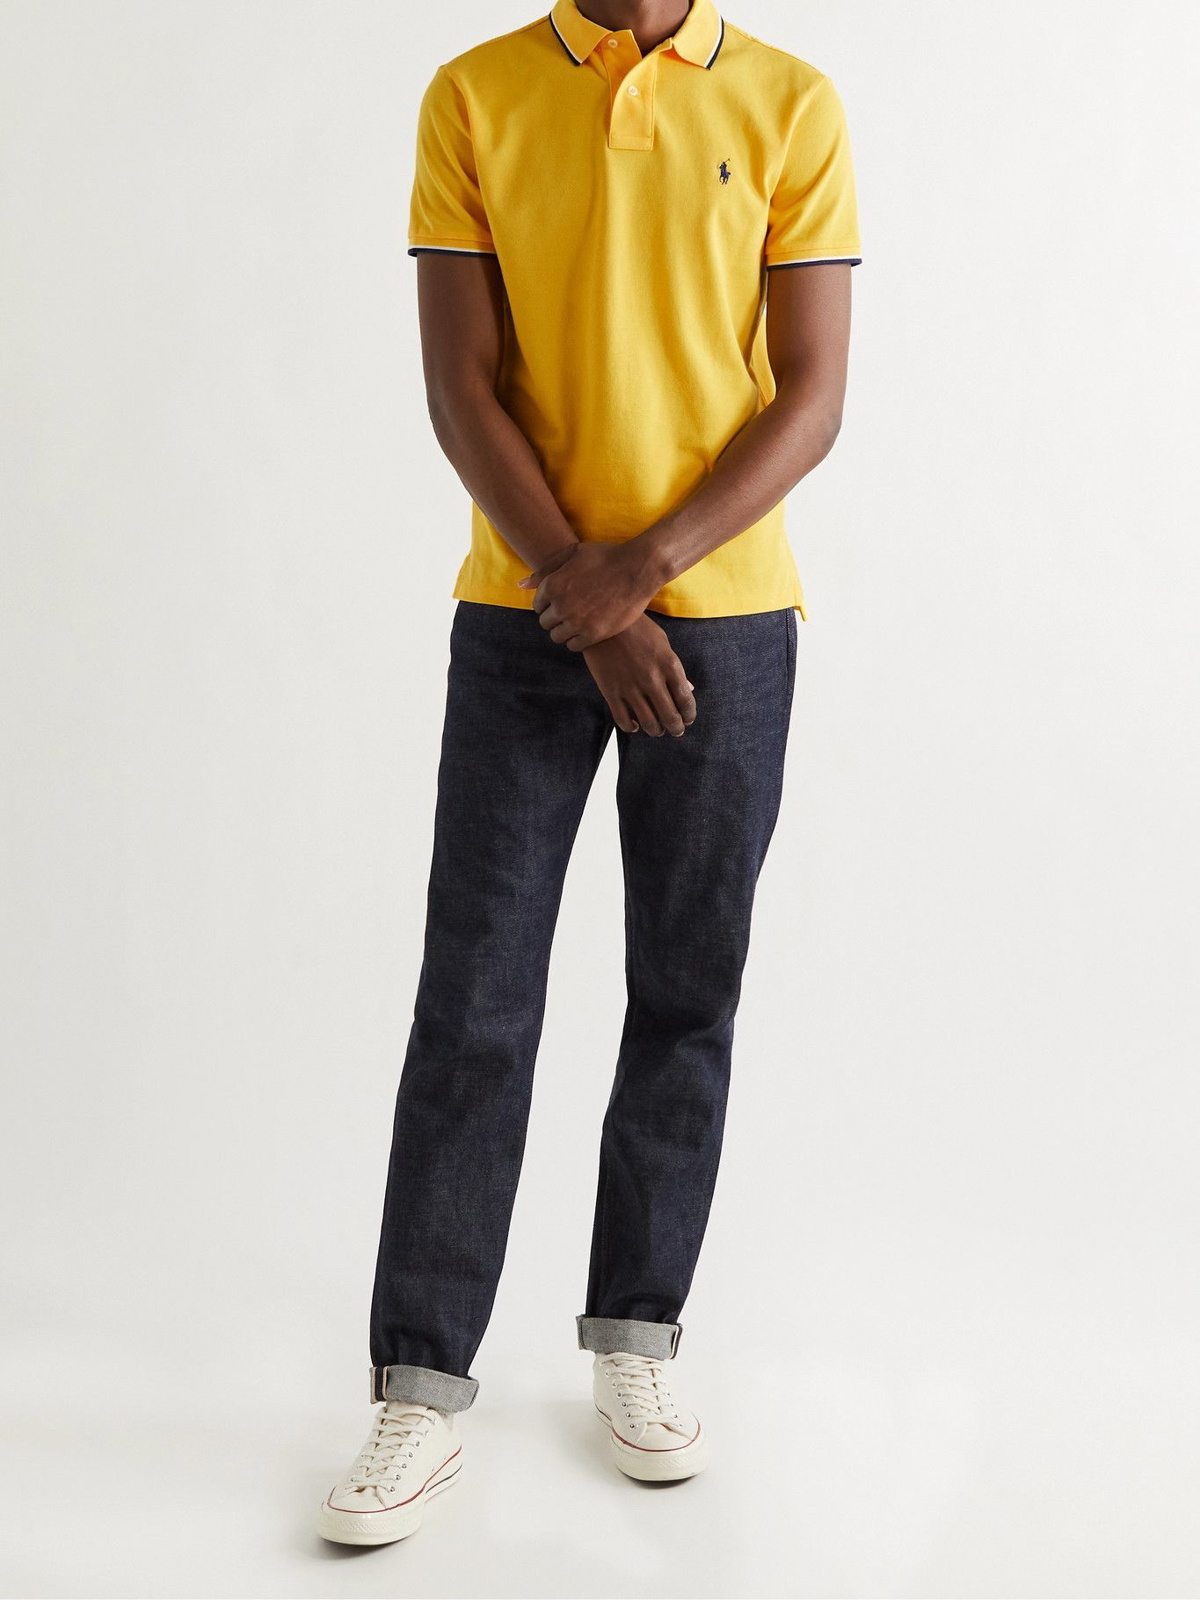 Polo Ralph Lauren Brasil Custom Fit Cotton Piqué Polo in Yellow